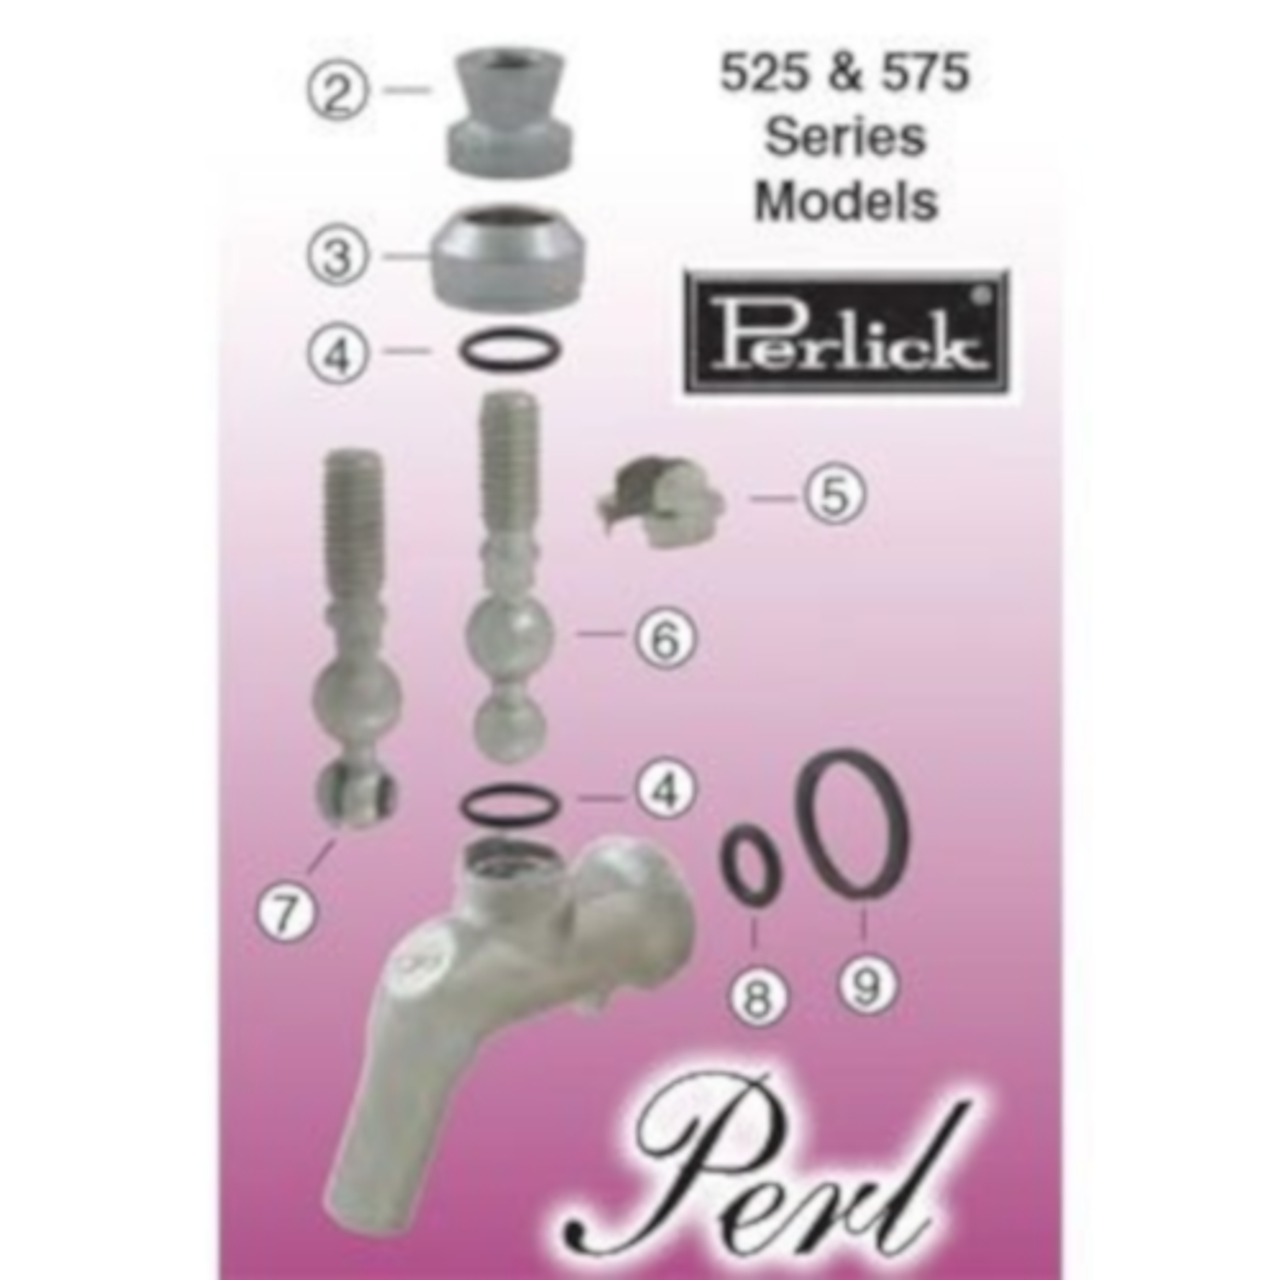 8 2 Faucet Rebuilds Homebrew Beer Tap O-rings for Perlick 525 & 575 Faucet 